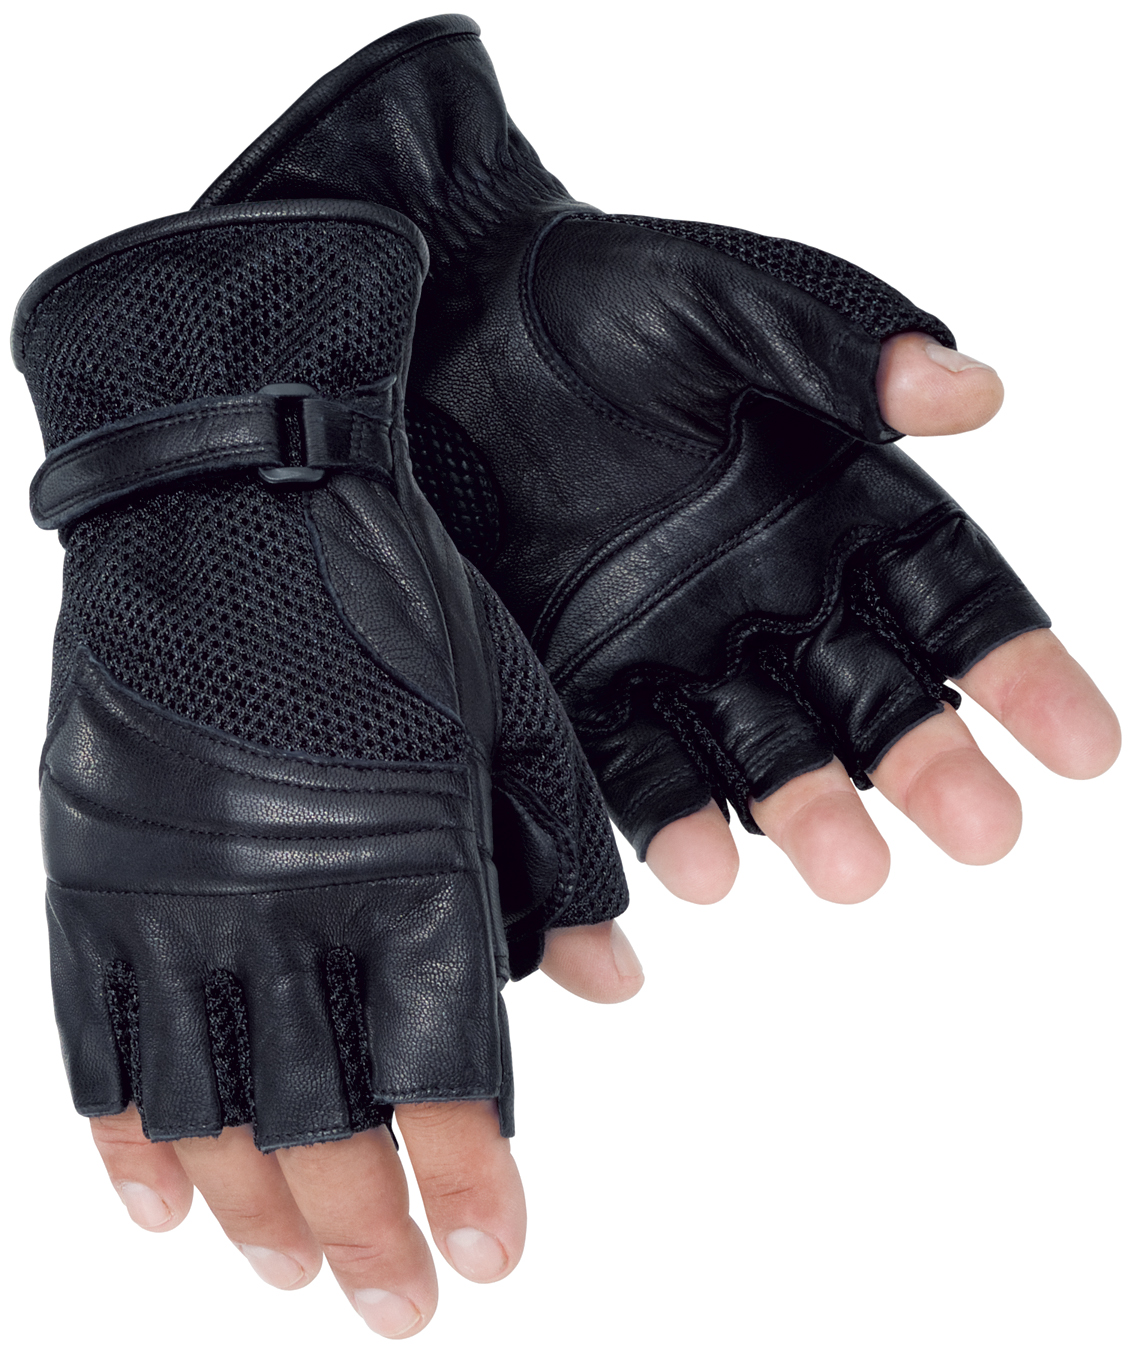 Tourmaster Black Mens Small Gel Cruiser 2 Fingerless Leather Motorcycle Gloves | eBay